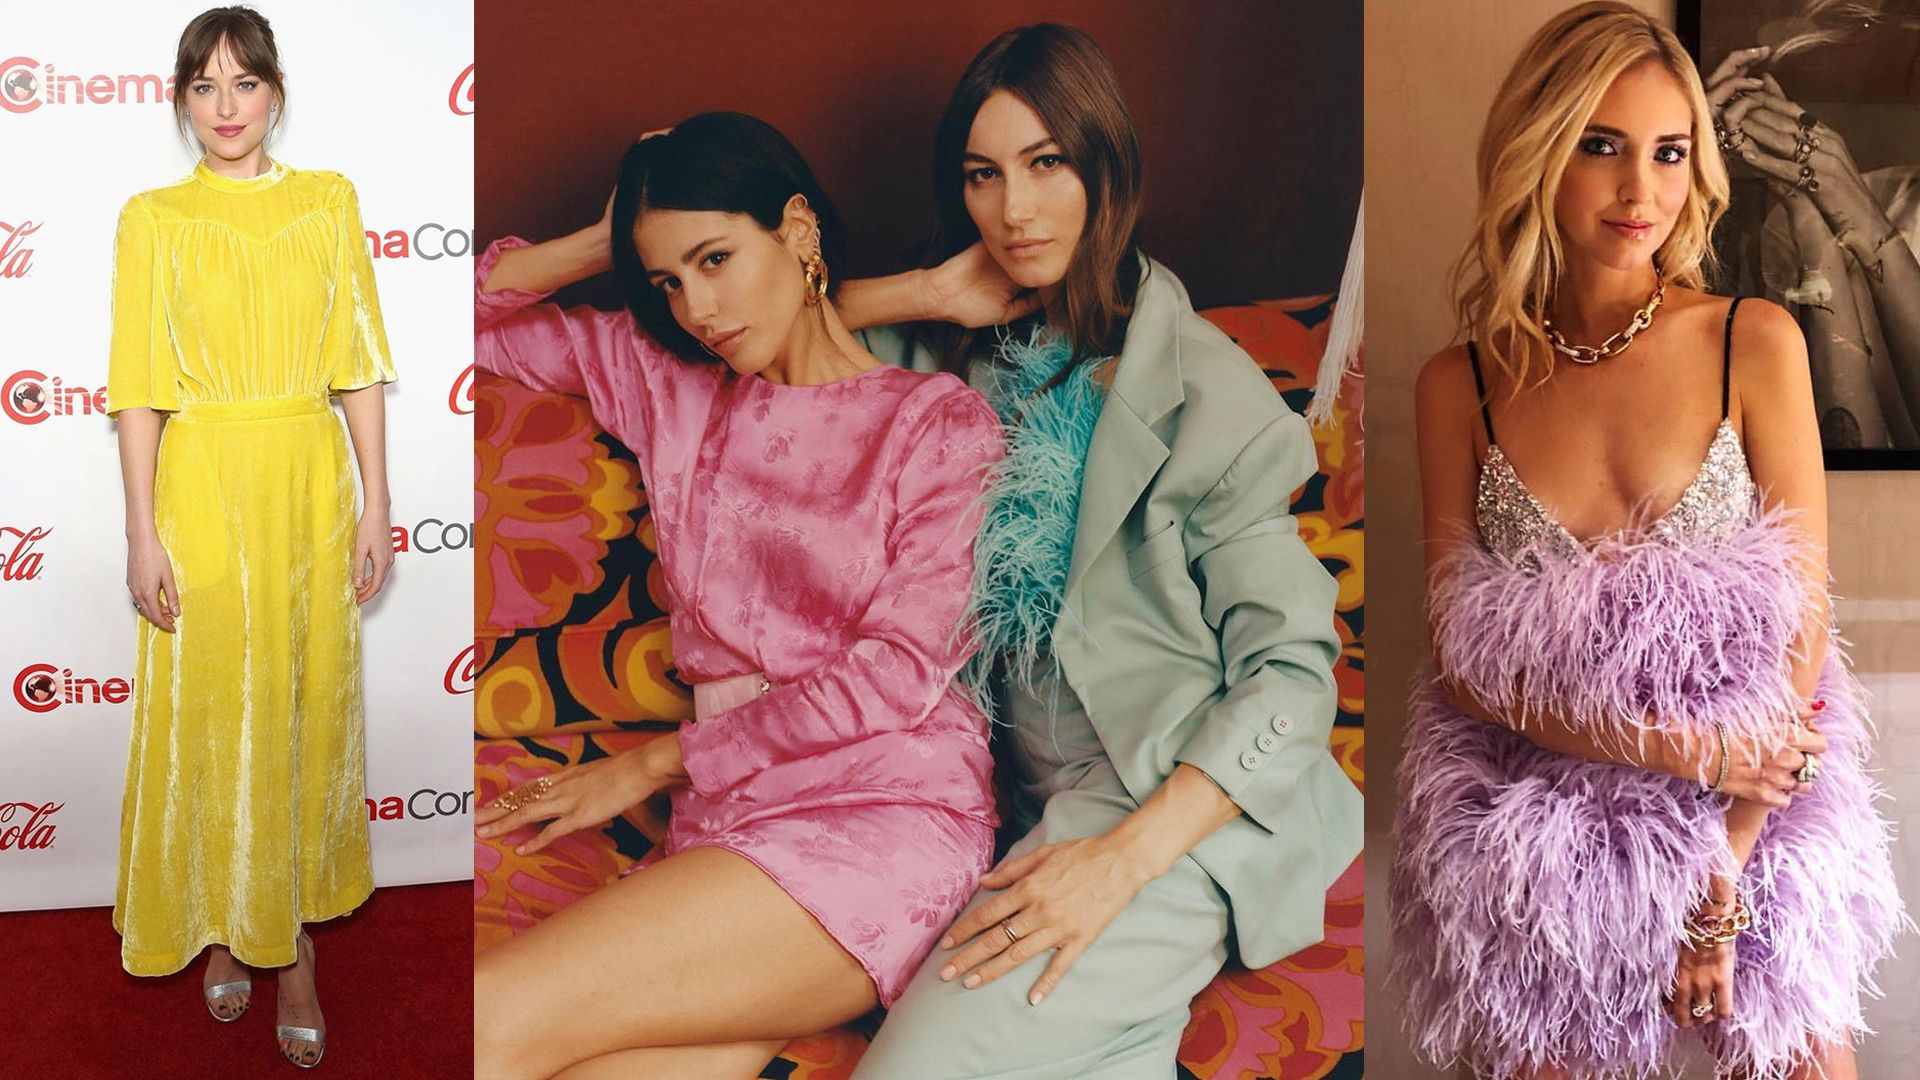 Giorgia Tordini y Gilda Ambrosio están al frente de The Attico, la marca que viste a varias celebrities. Dakota Johnson y Chiara Ferragni son fans.